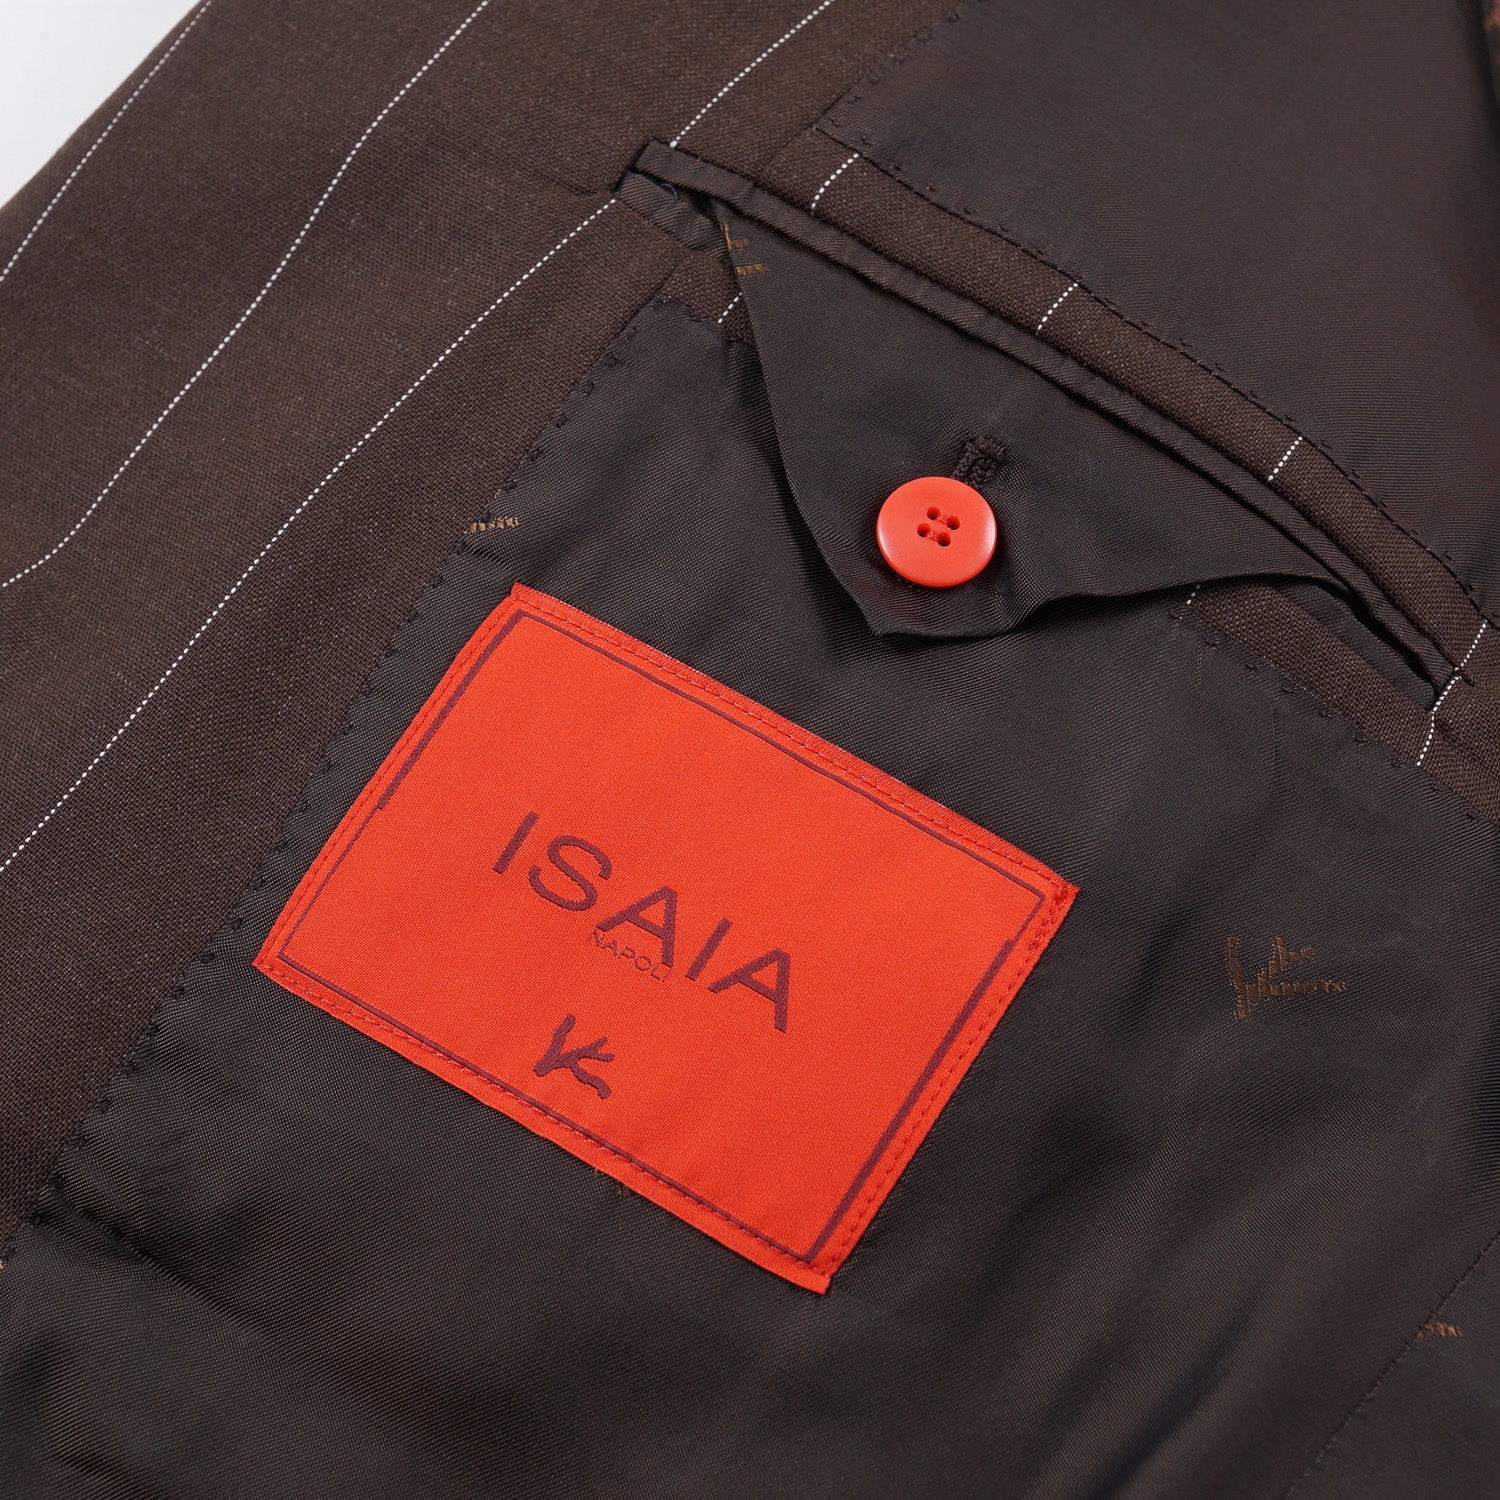 Isaia Slim-Fit 'Sanita' Wool Suit - Top Shelf Apparel